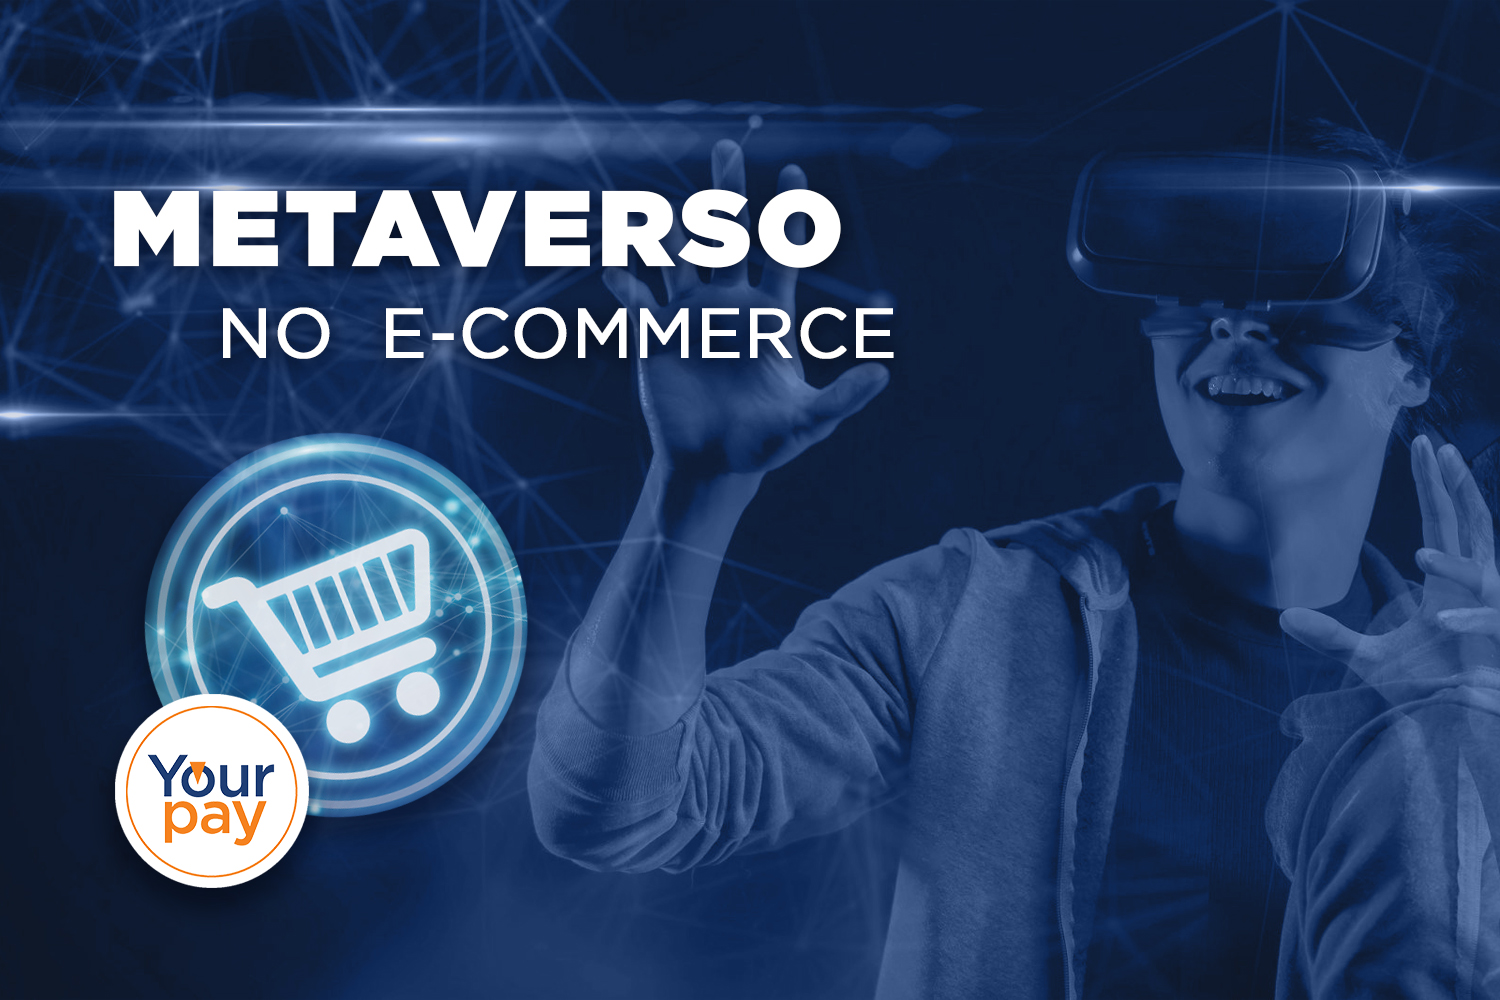 metaverso, e-commerce, yourpay